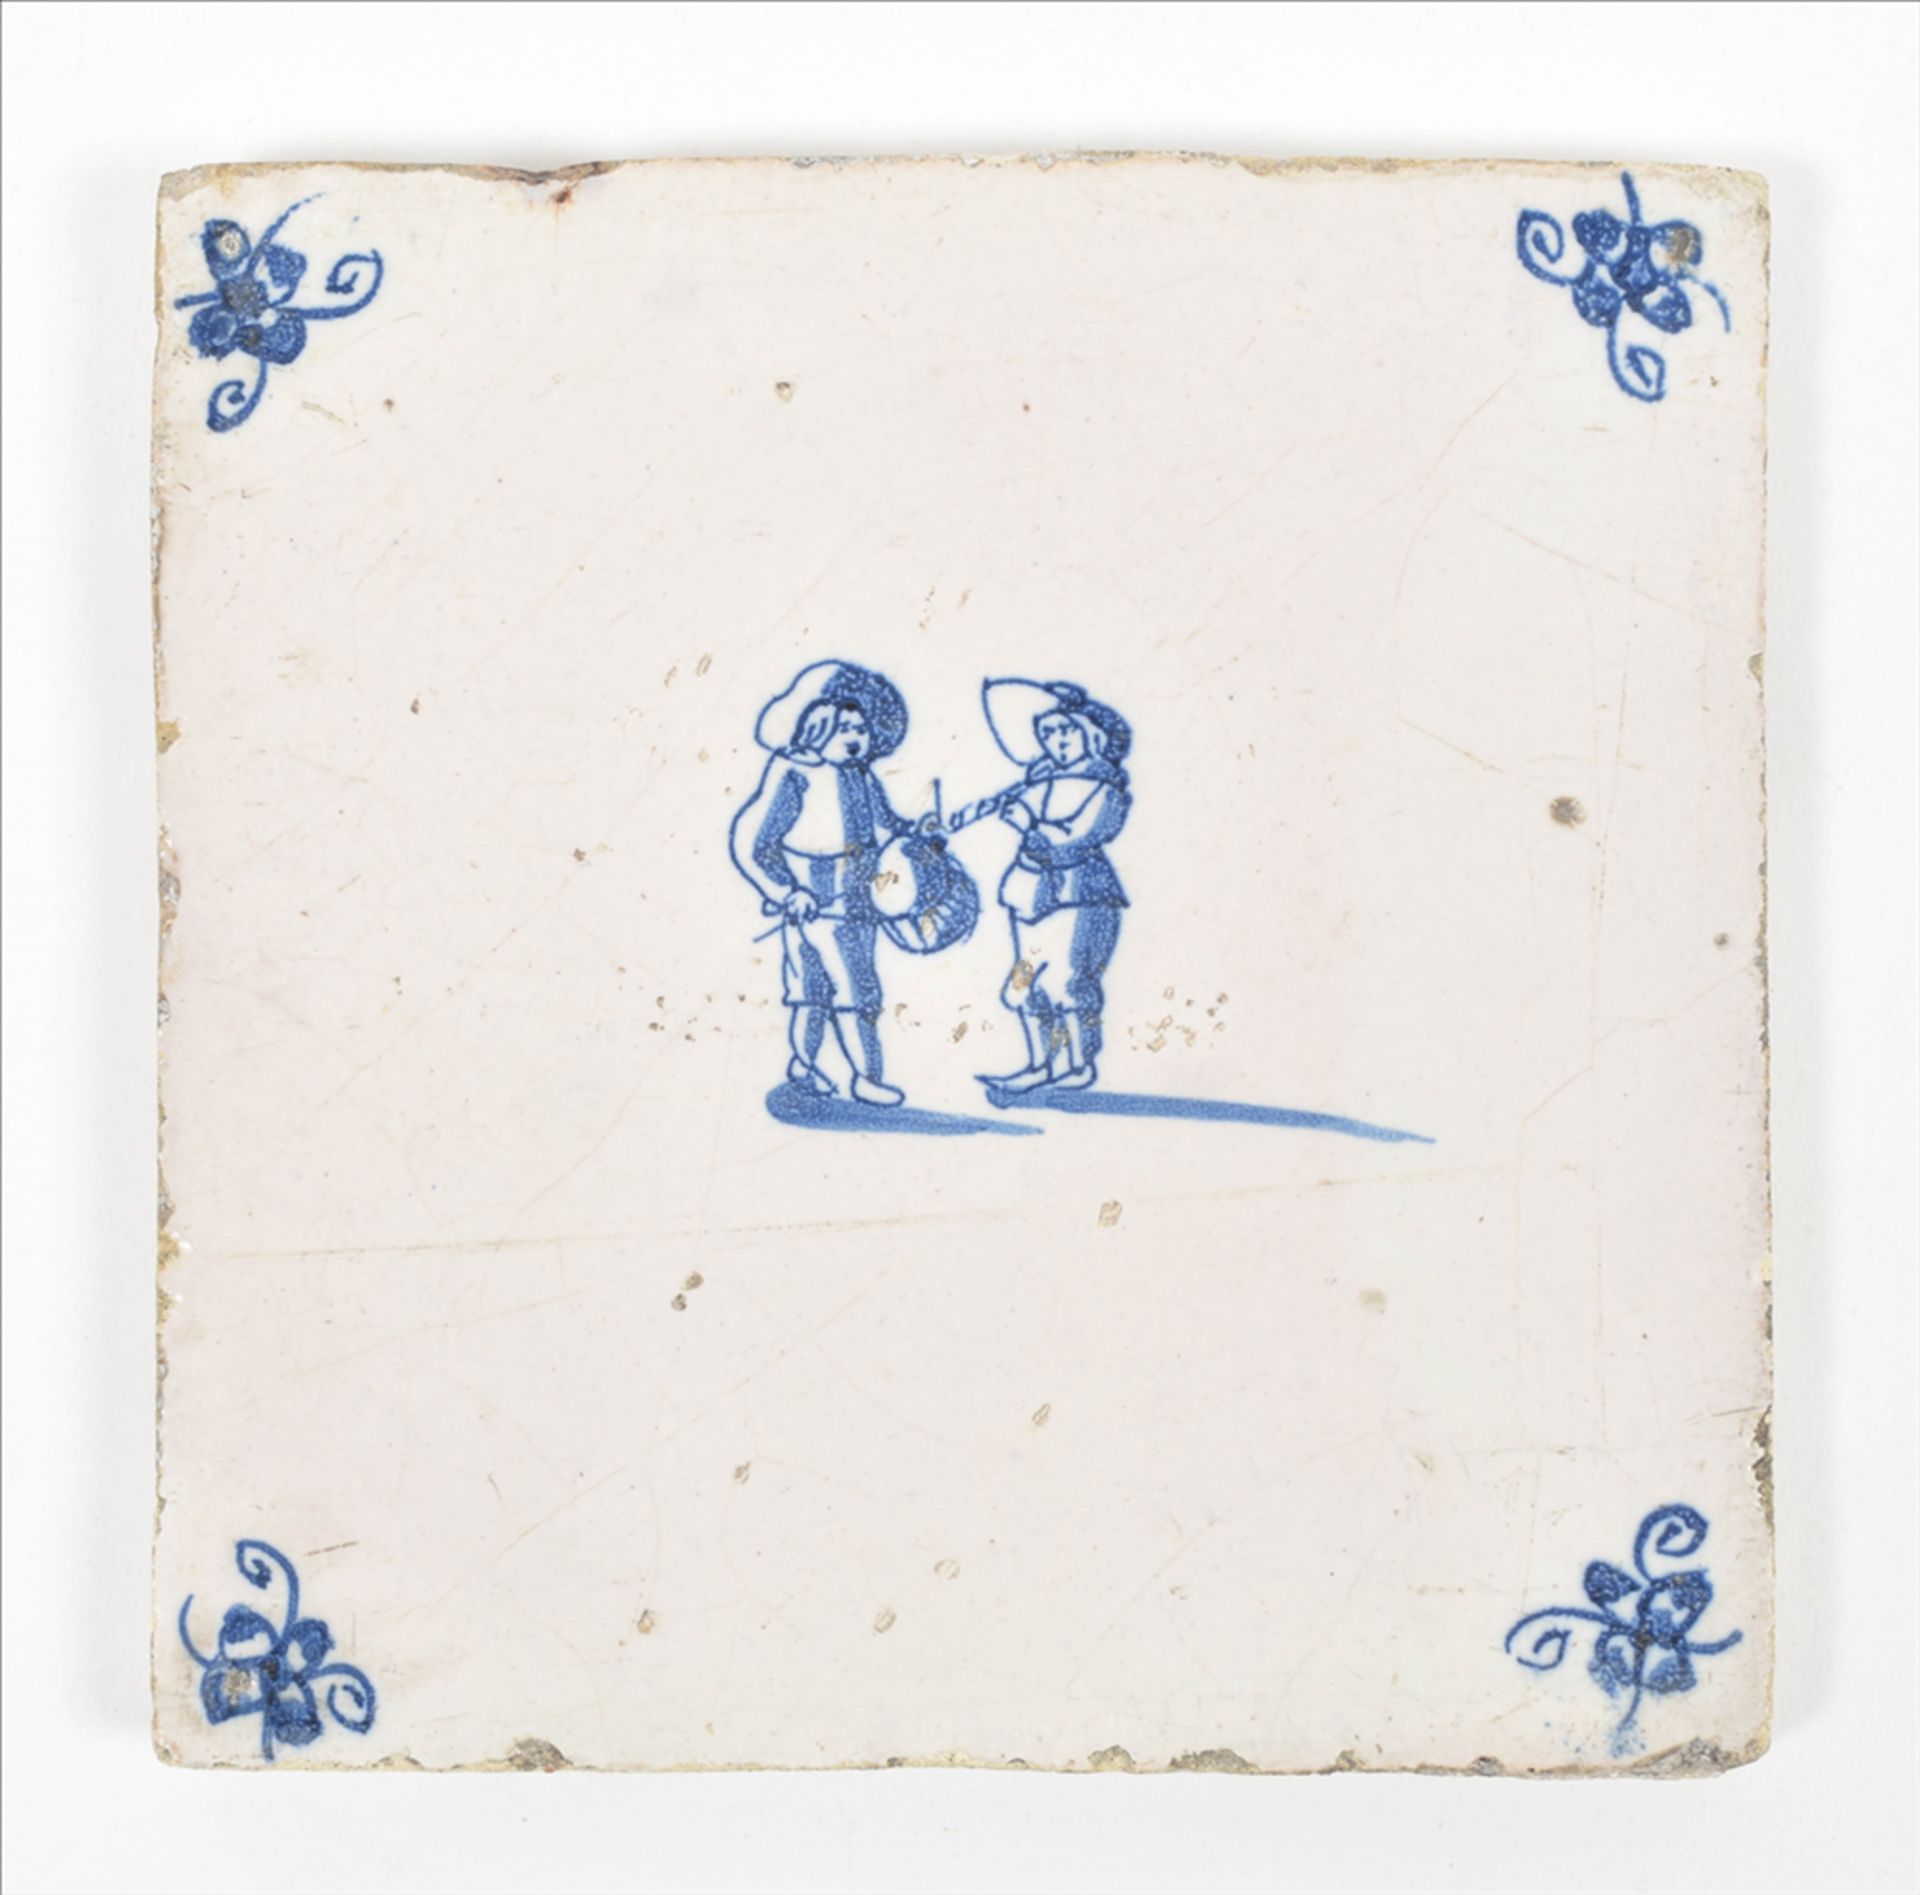 Six children's games Dutch tiles - Image 8 of 10